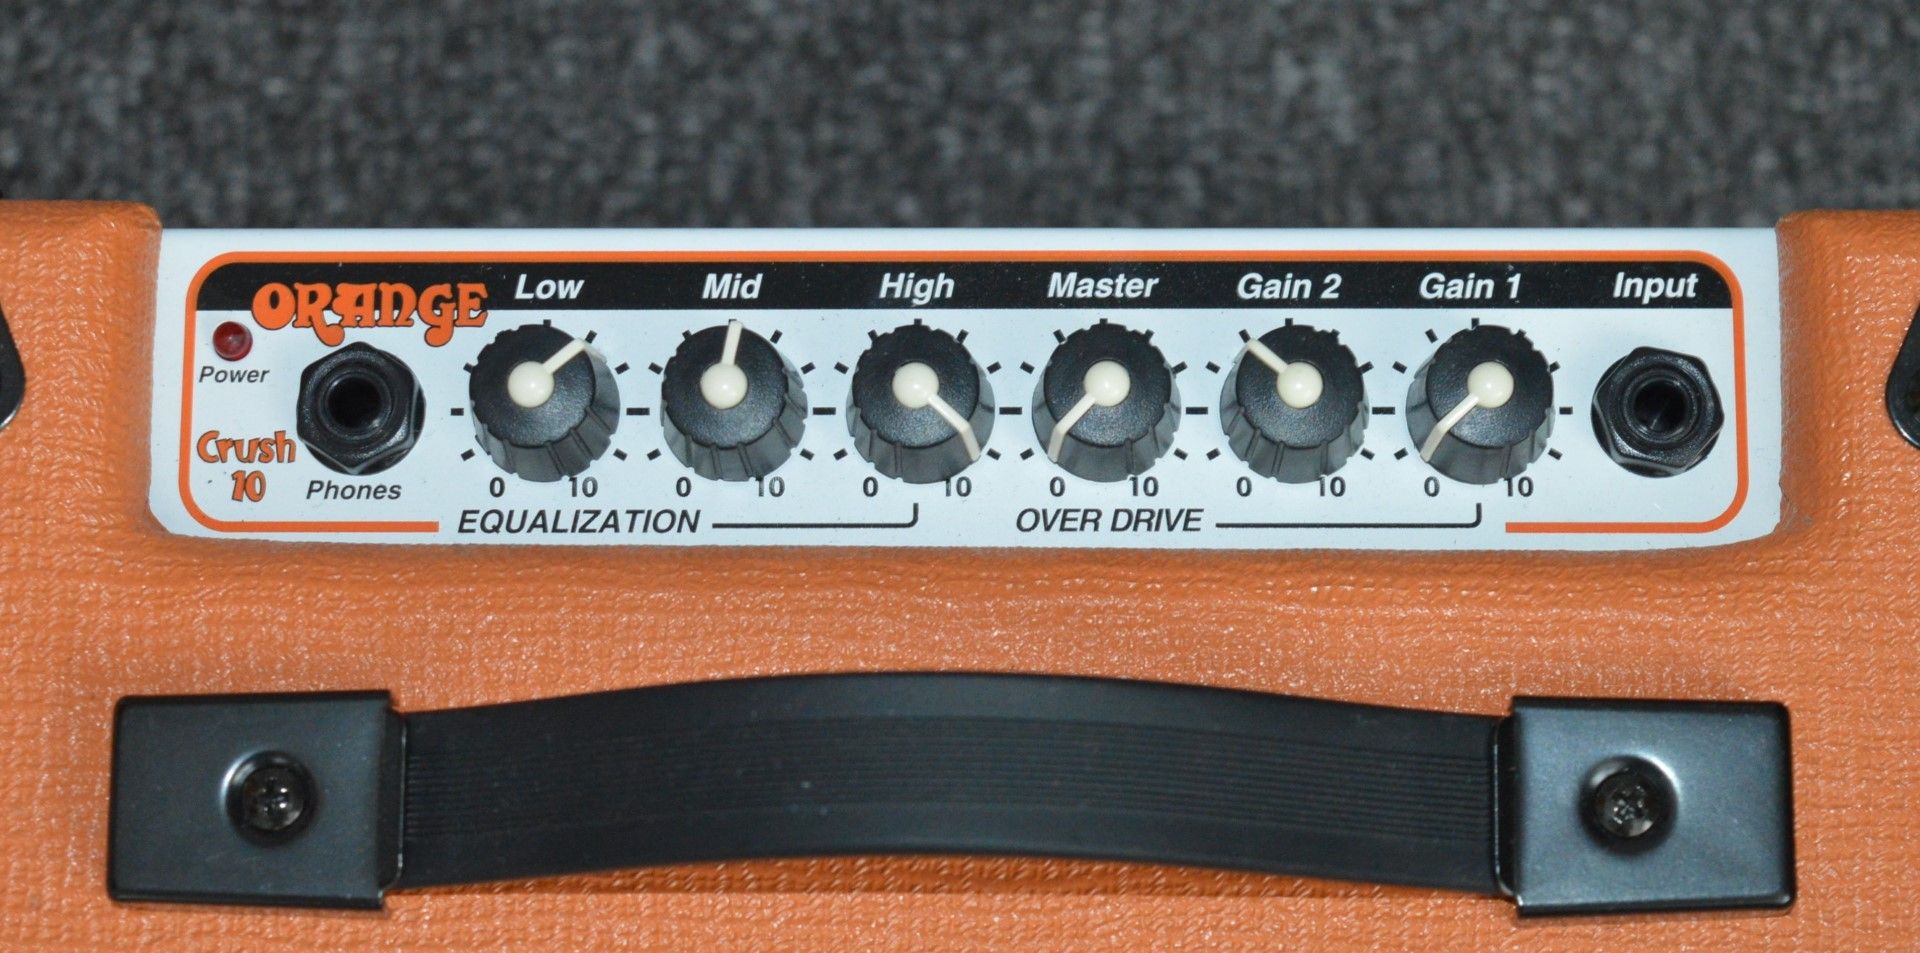 1 x Orange Crush 10w Guitar Amp - CL010 - Ideal Practice Amp Featuing 3 Band EQ, 2 Gain Controls, - Image 5 of 7